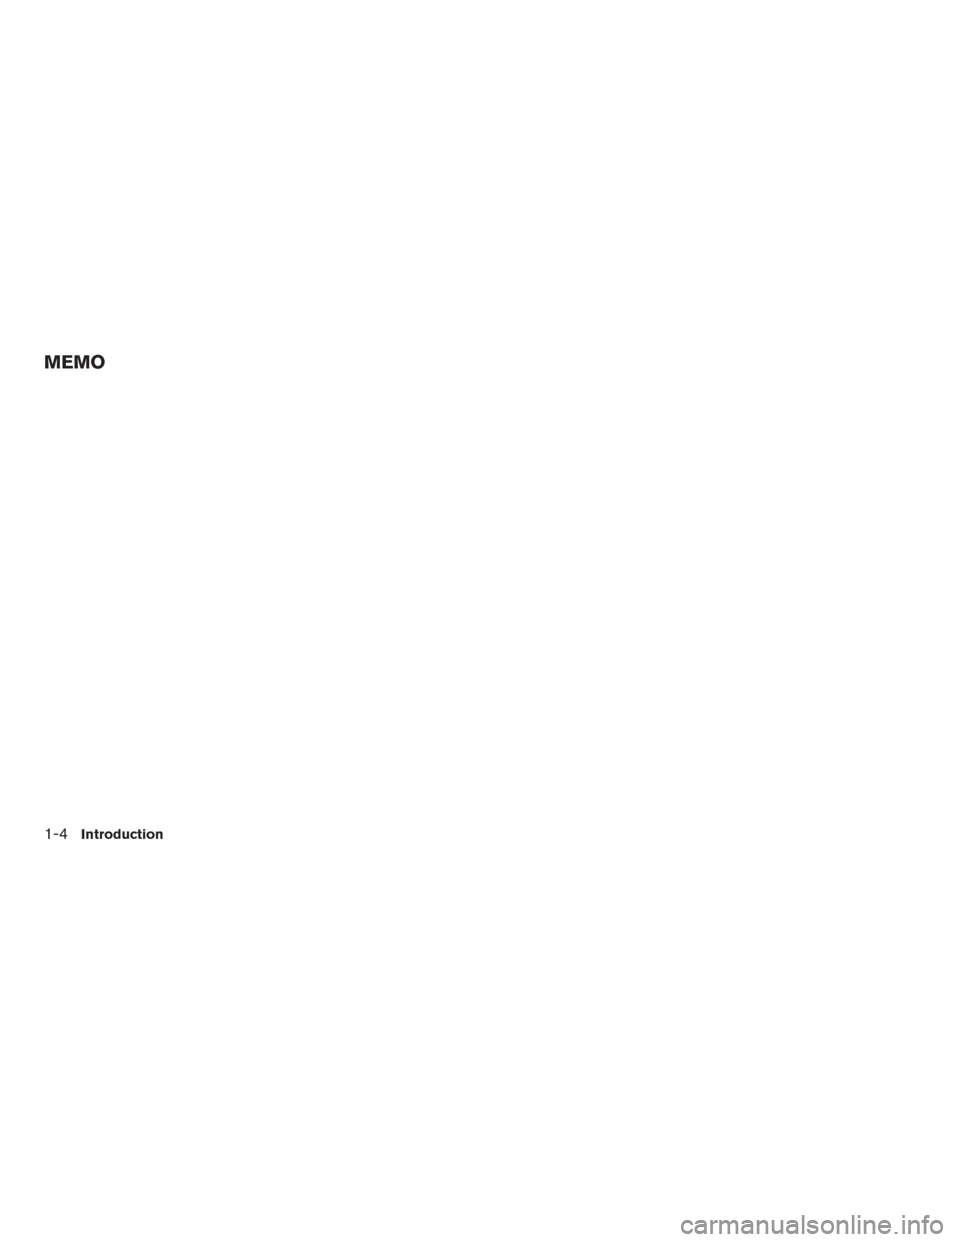 NISSAN CUBE 2014 3.G LC1 Navigation Manual 1-4Introduction
MEMO 